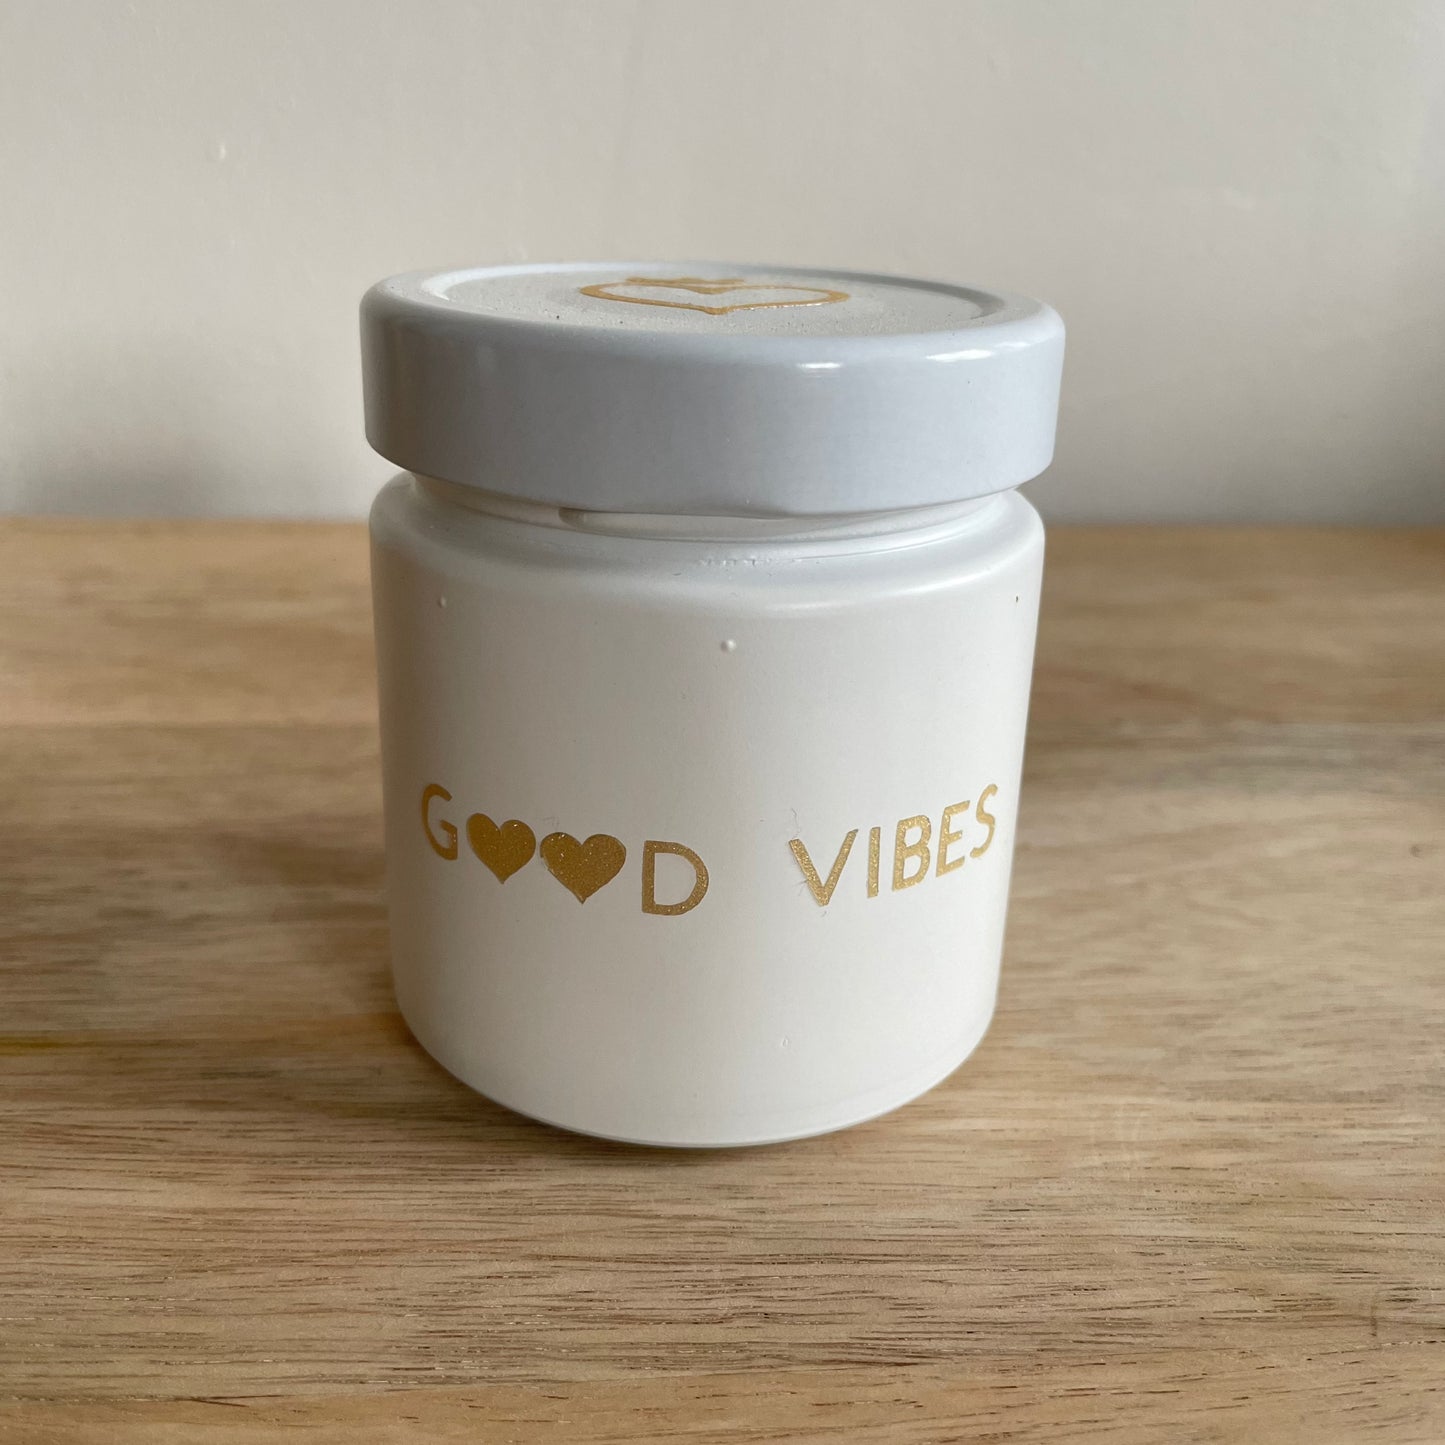 "GOOD VIBES" bougie parfumée Vanille